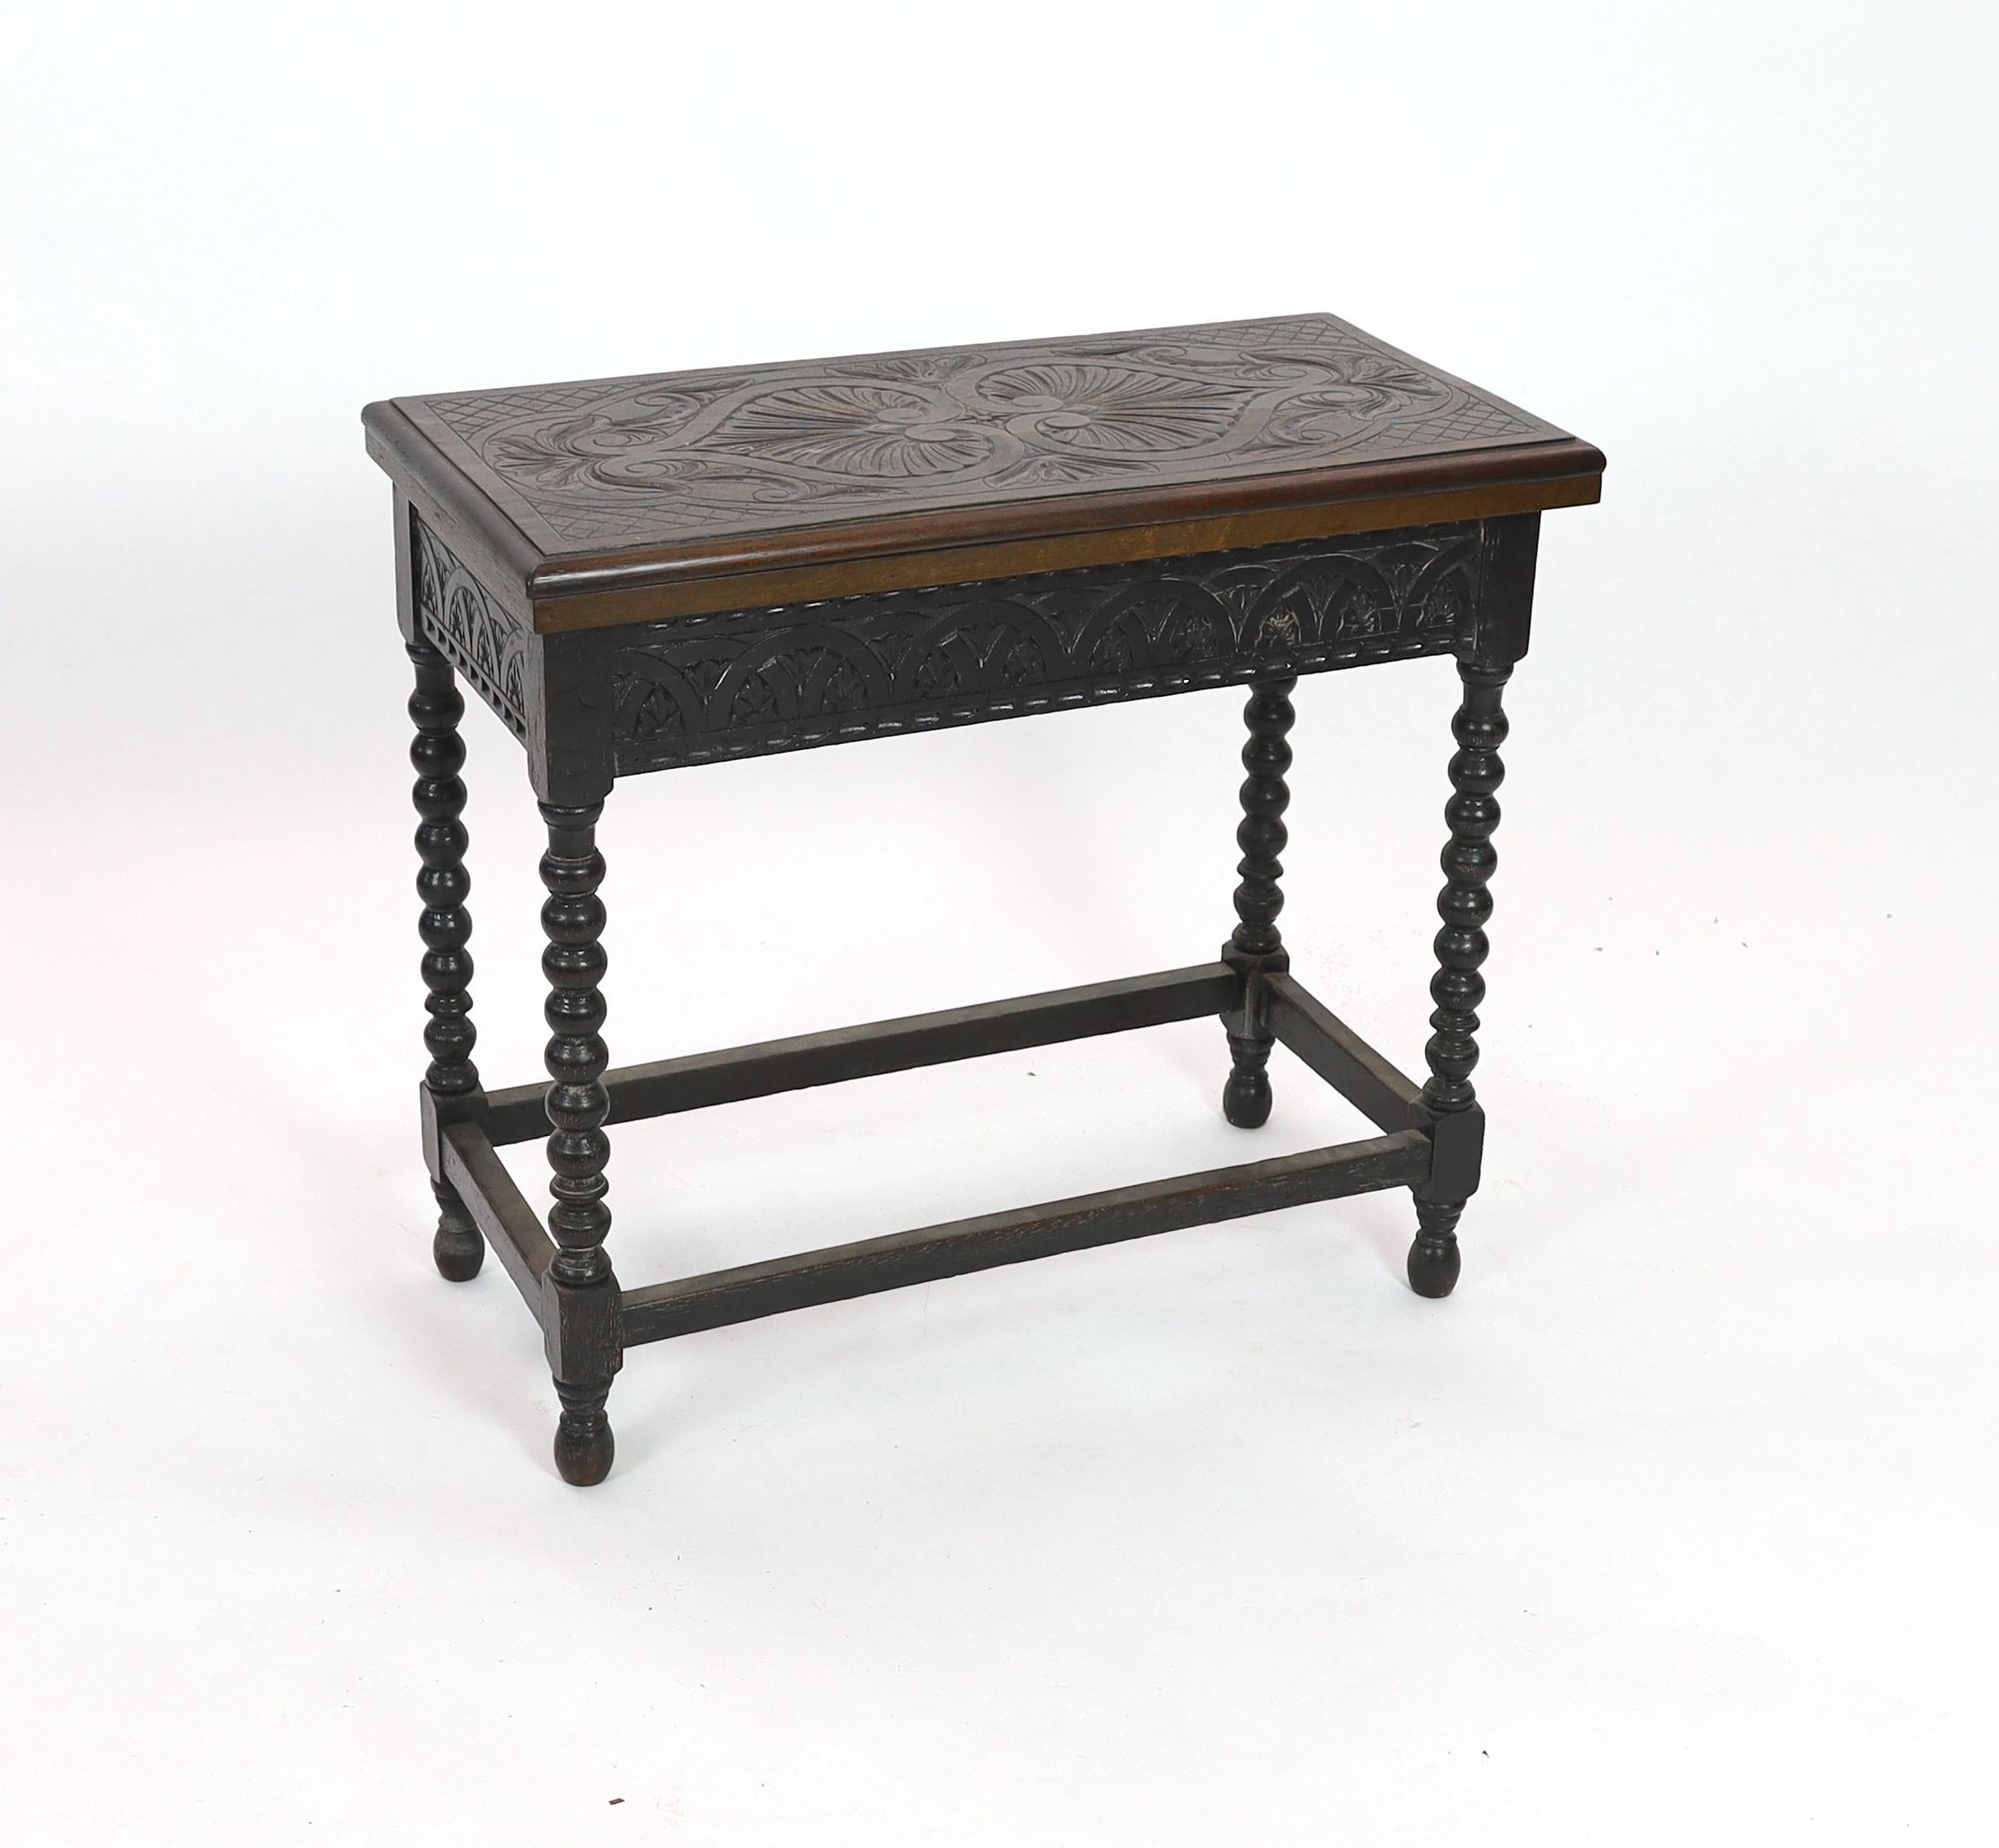 An early 20th century Jacobean revival rectangular carved oak folding card table, on bobbin turned legs, width 80cm depth 40cm height 73cm